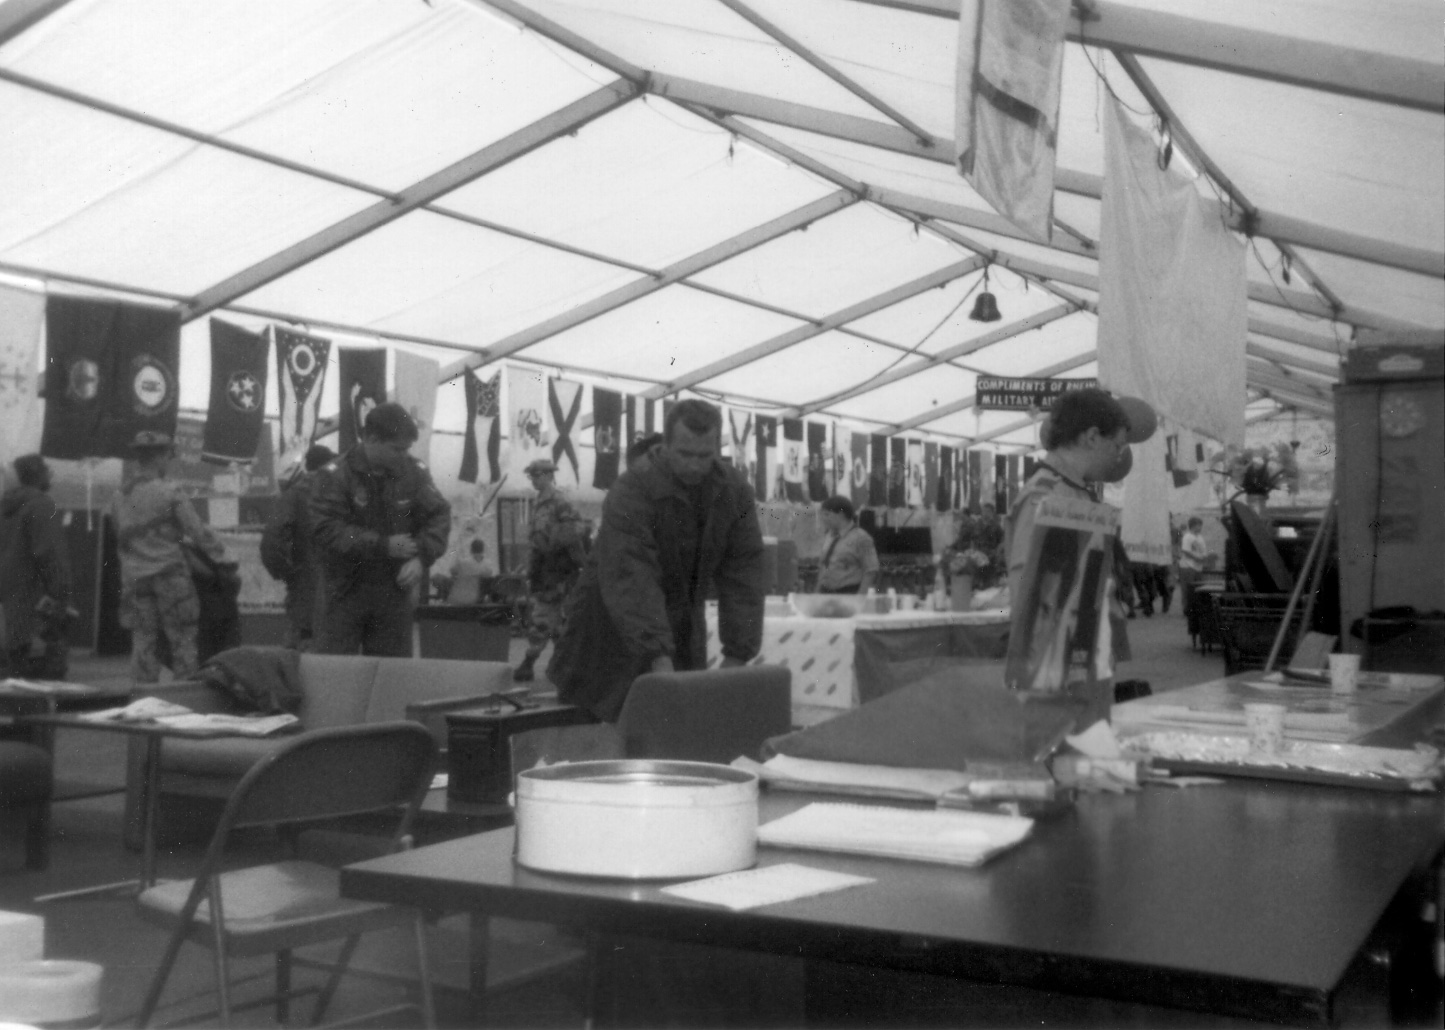 Tent City, 1991